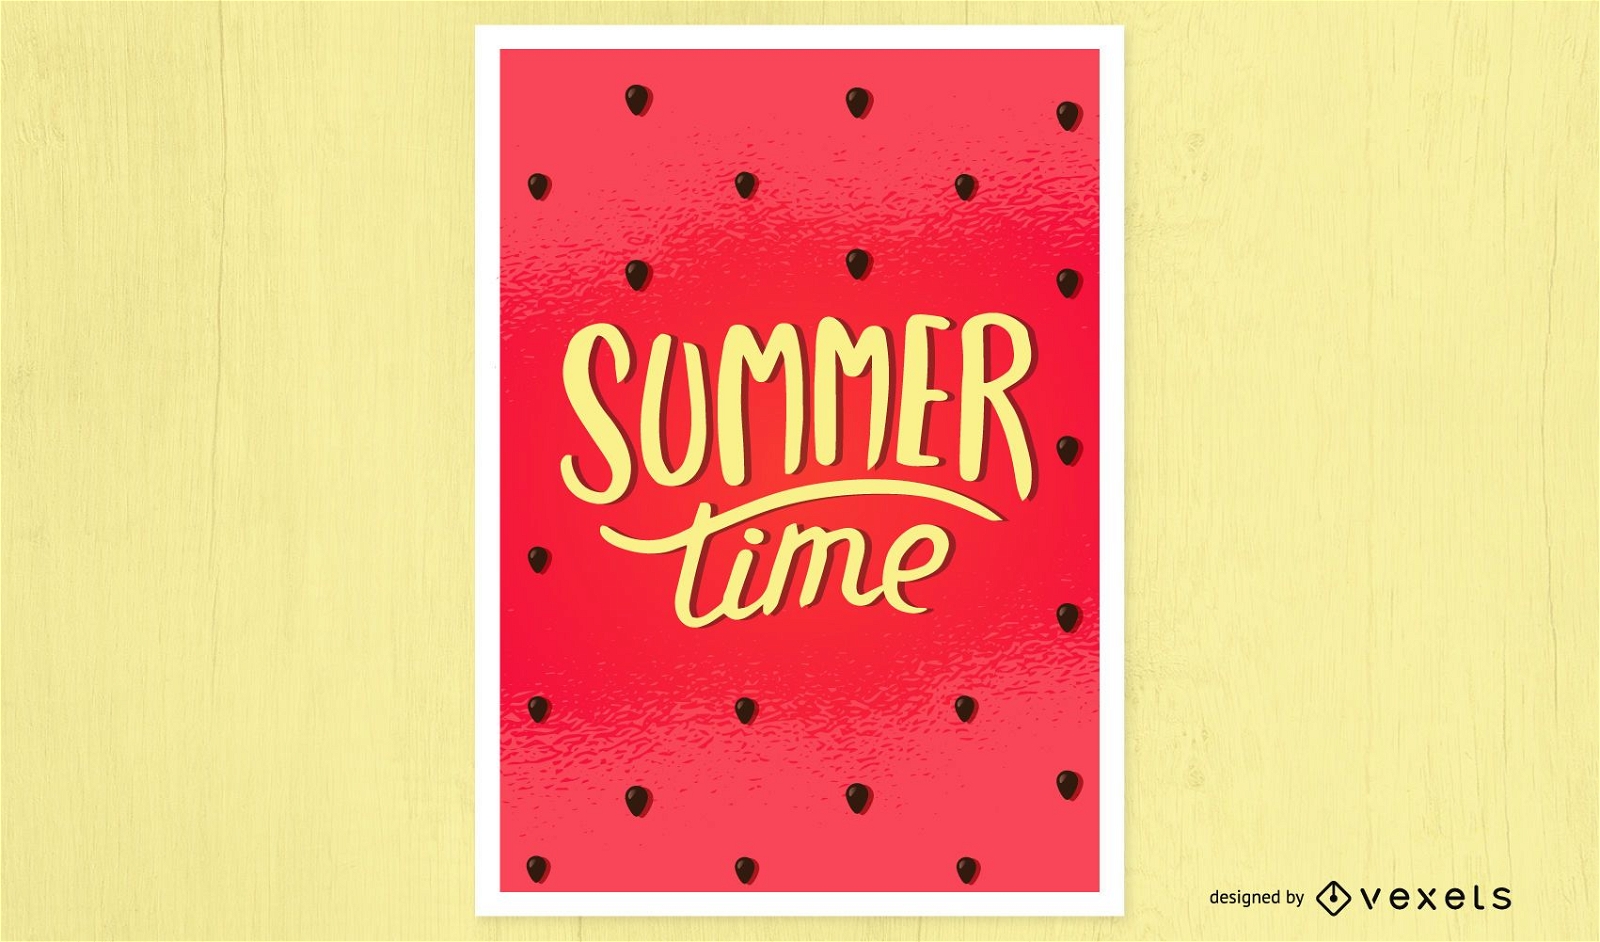 Summertime watermelon poster design